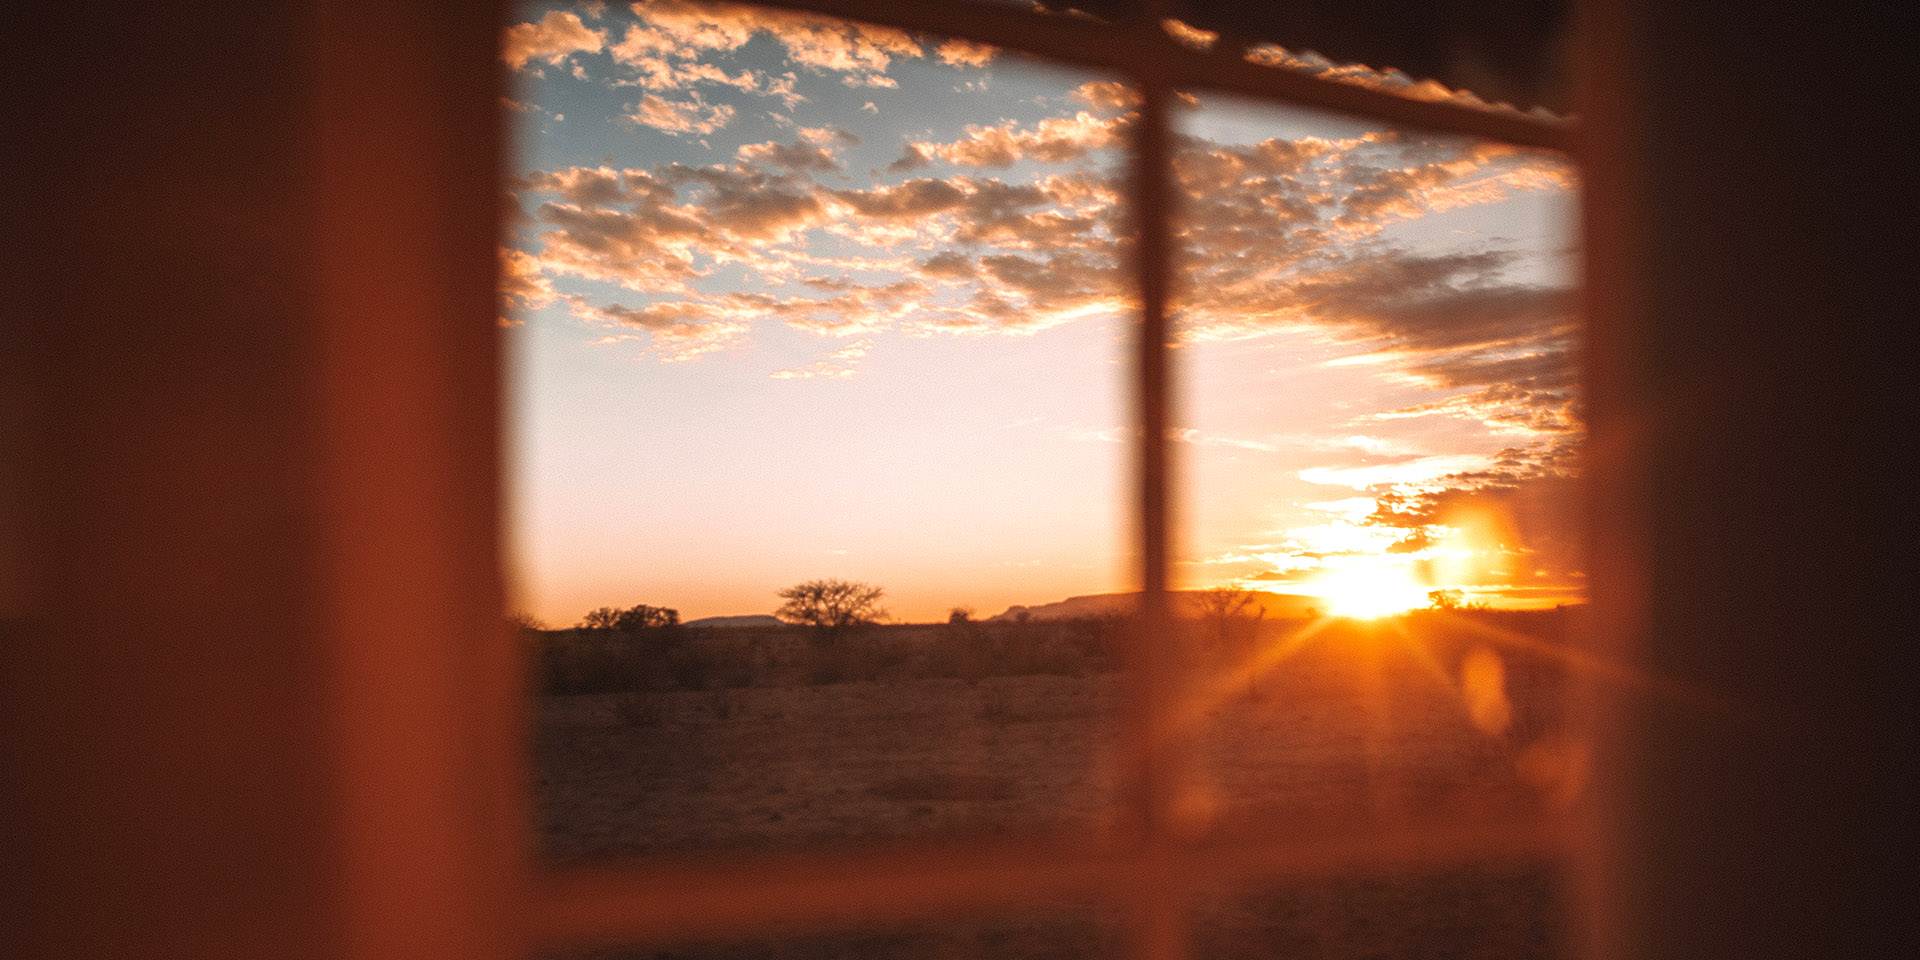 Sunset in Namibia through window